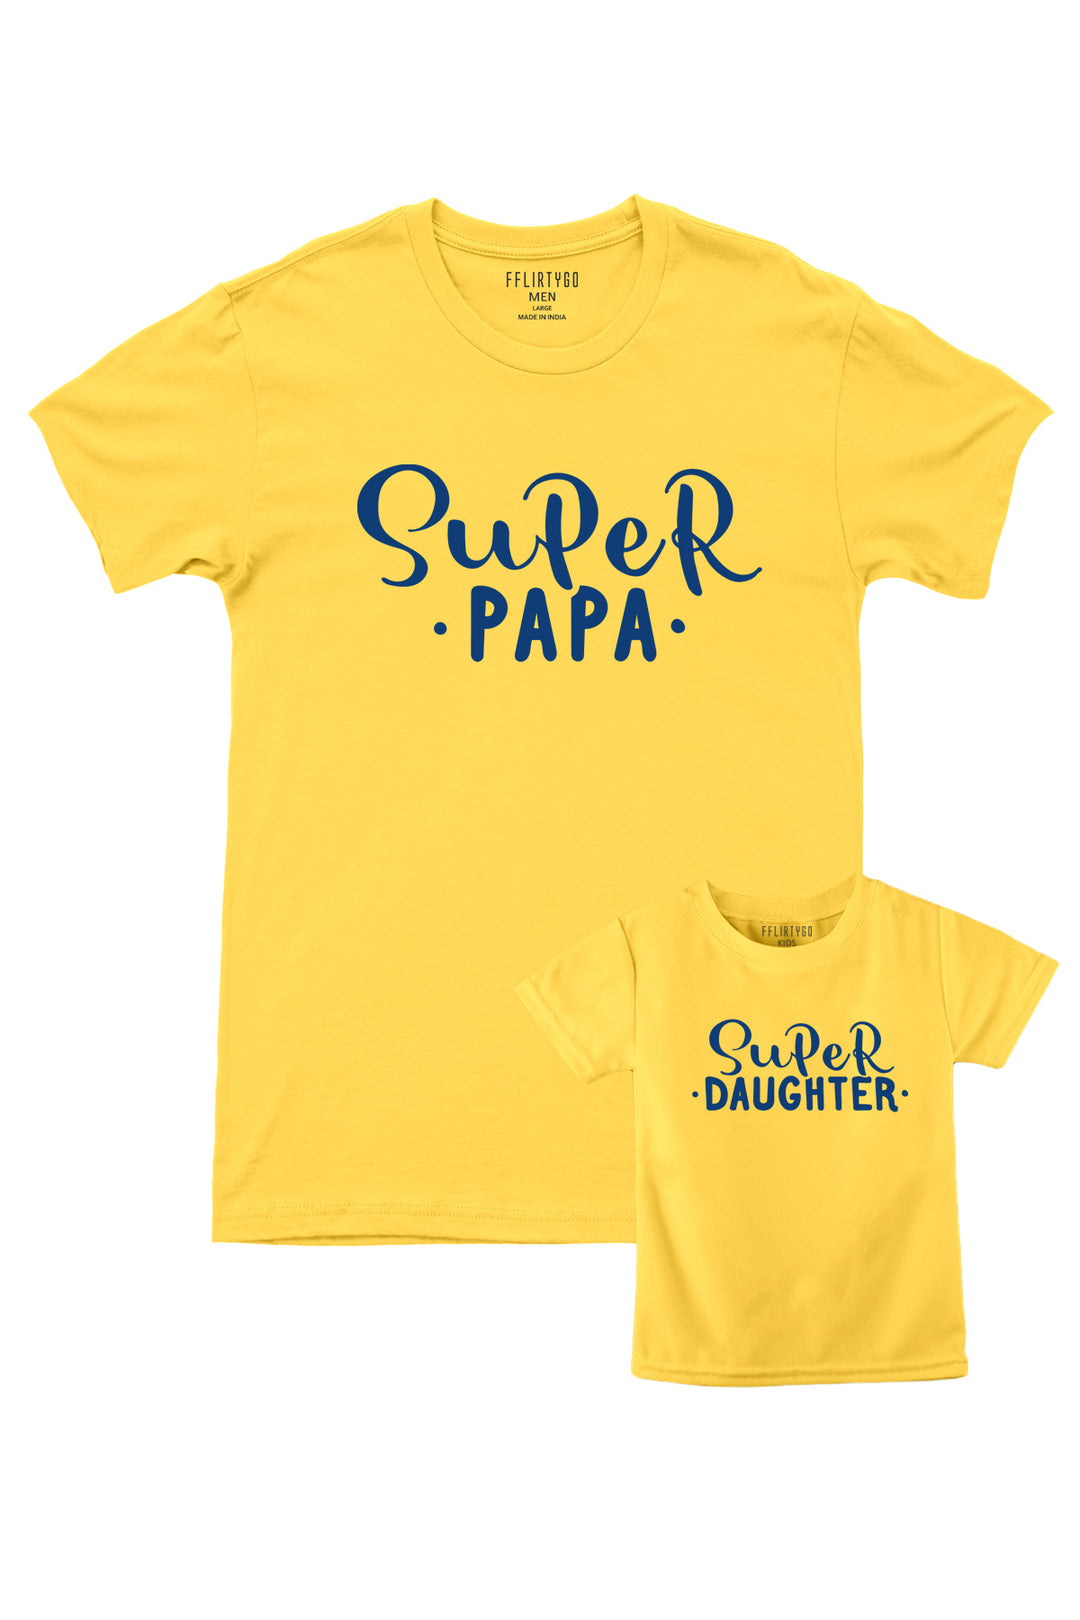 Super Papa - Super Daughter